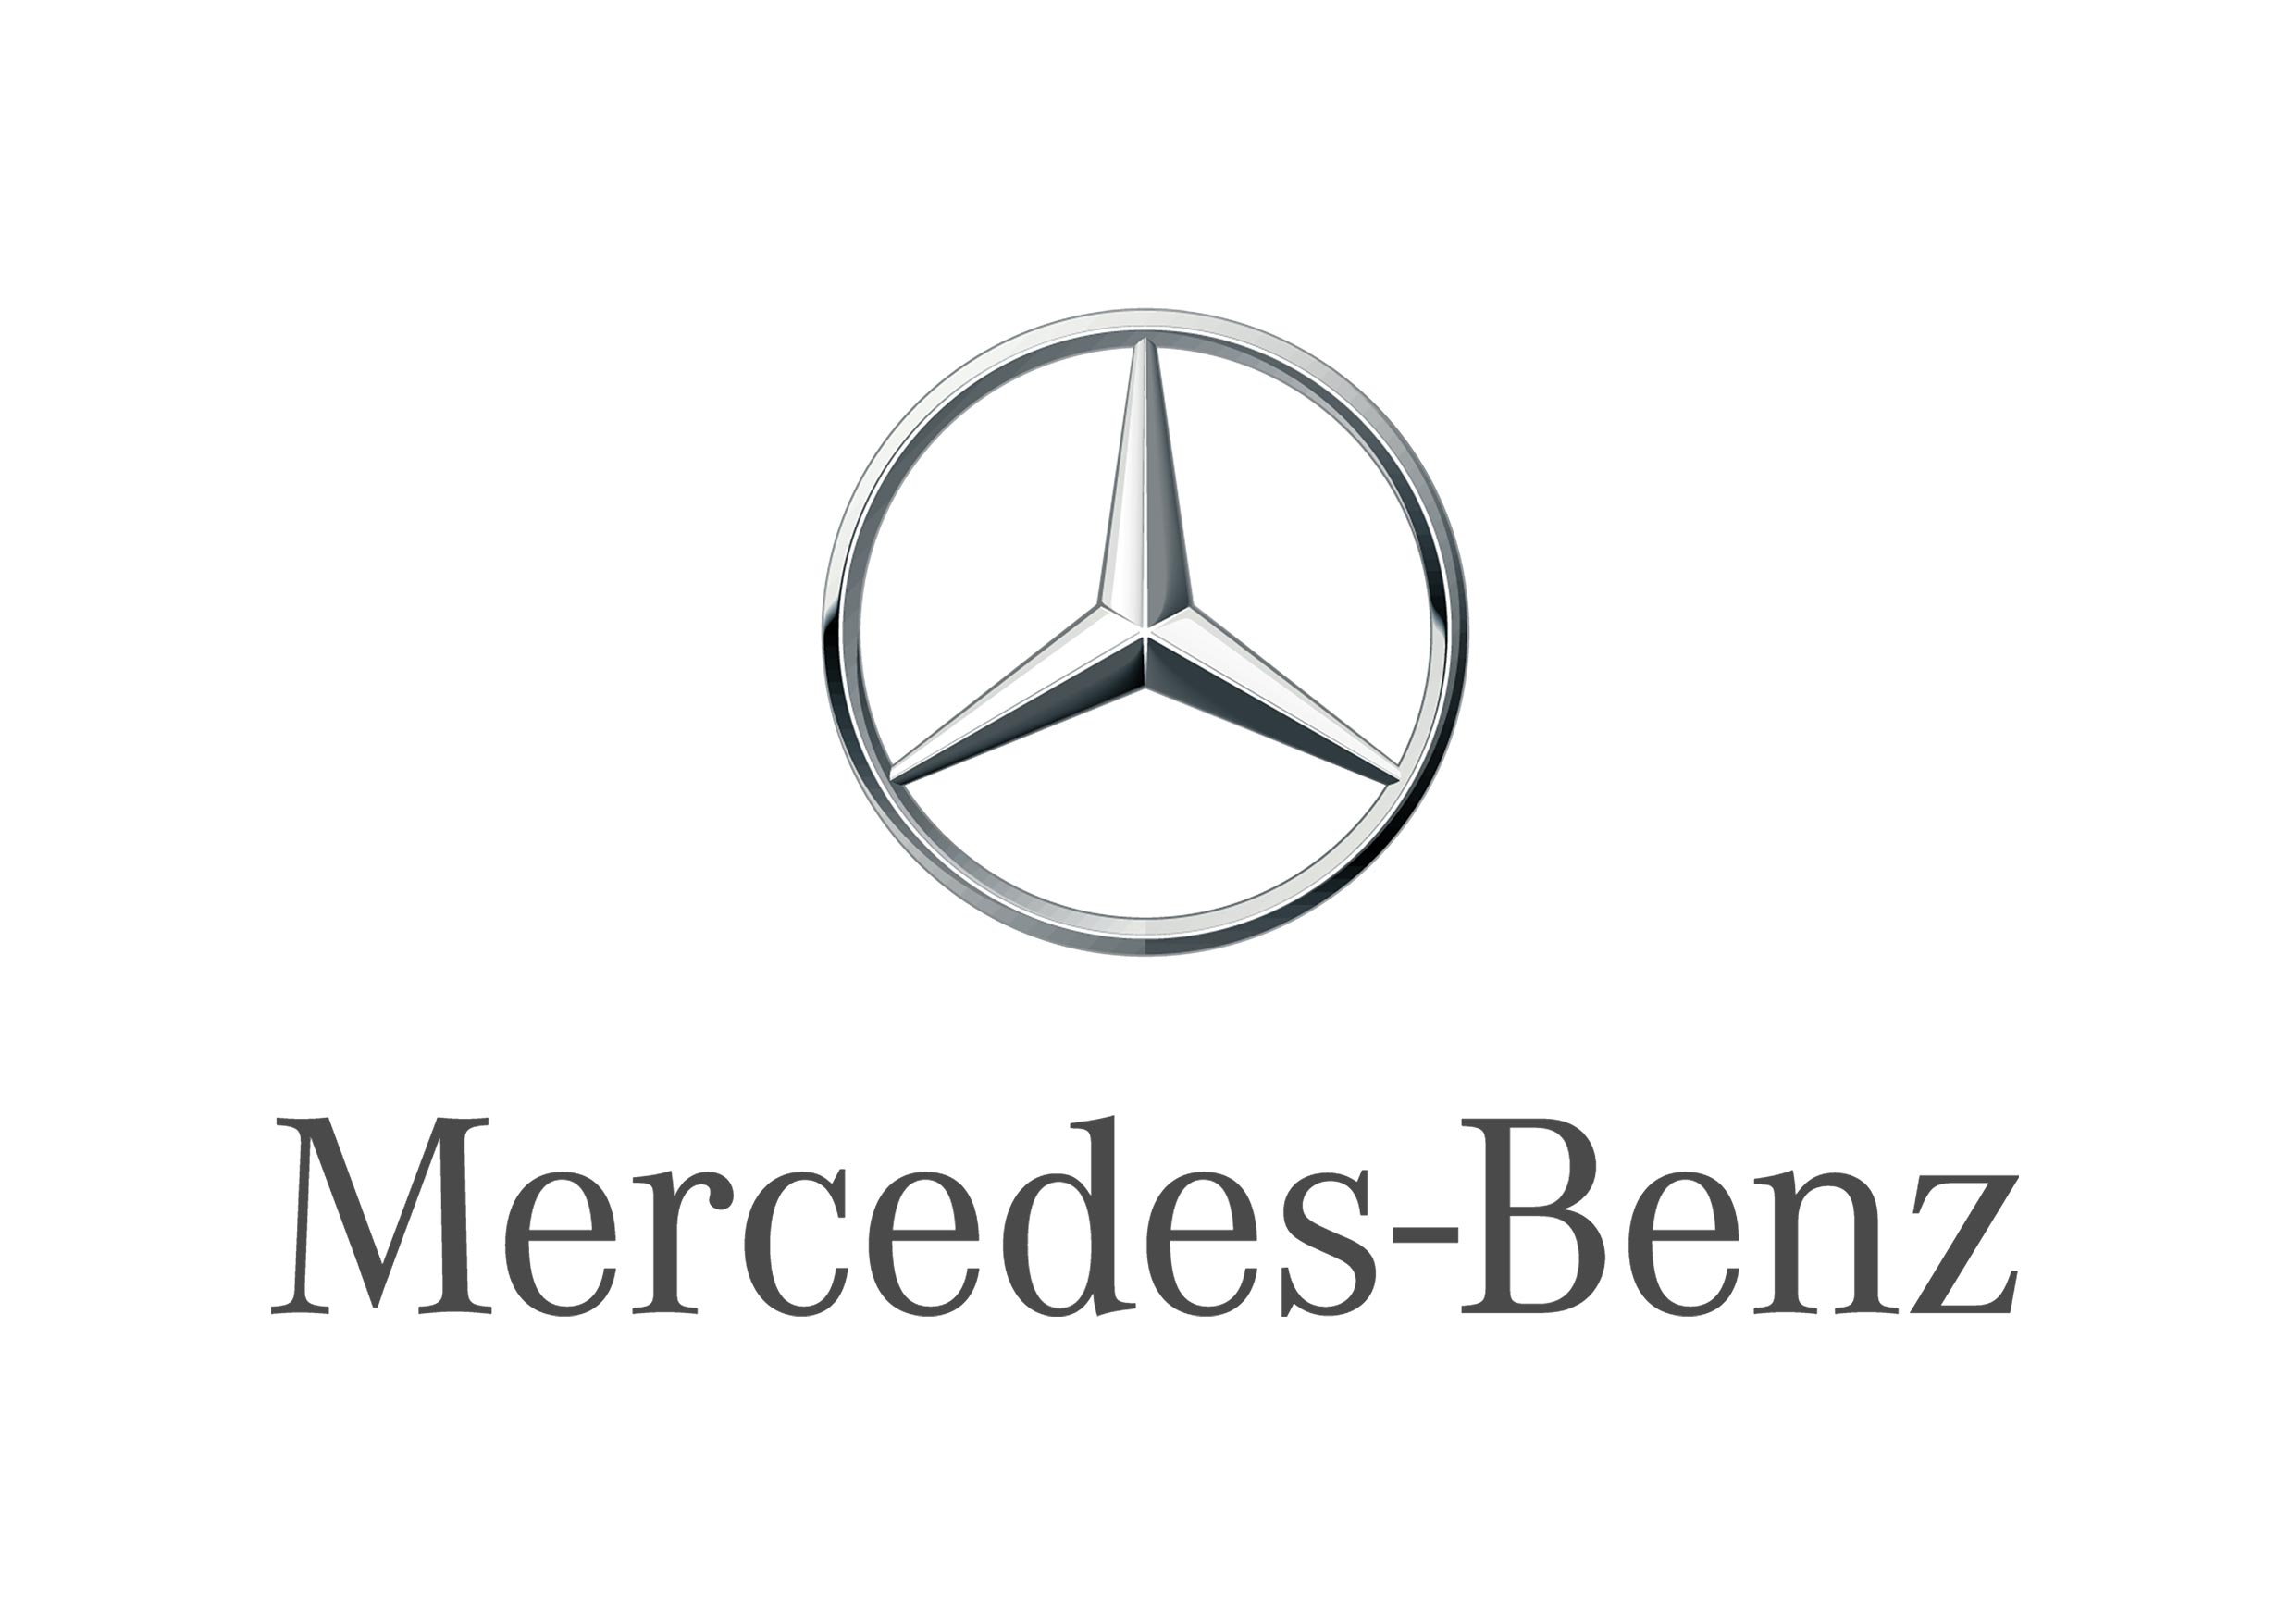 5. Mercedes-Benz